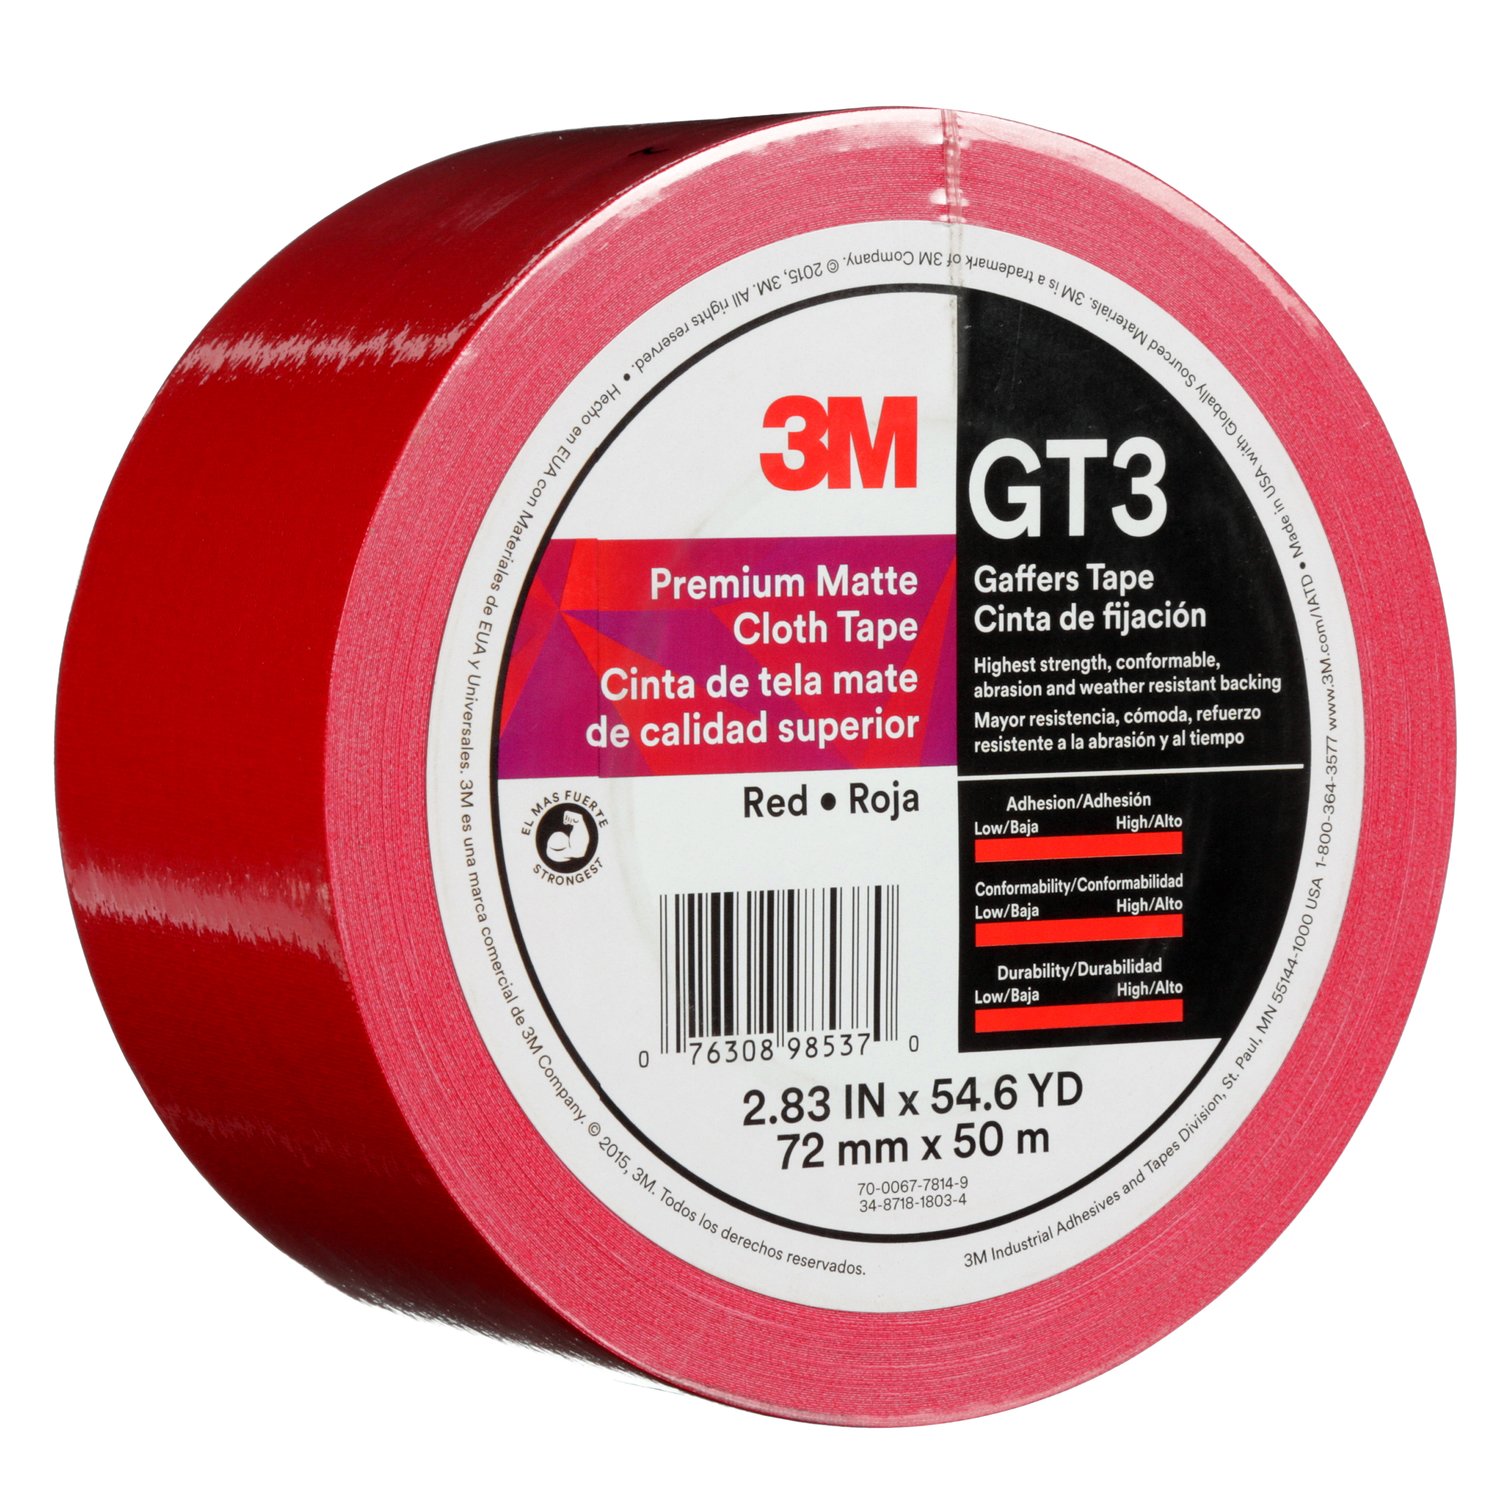 7010375524 - 3M Premium Matte Cloth (Gaffers) Tape GT3, Red, 72 mm x 50 m, 11 mil,
16/Case